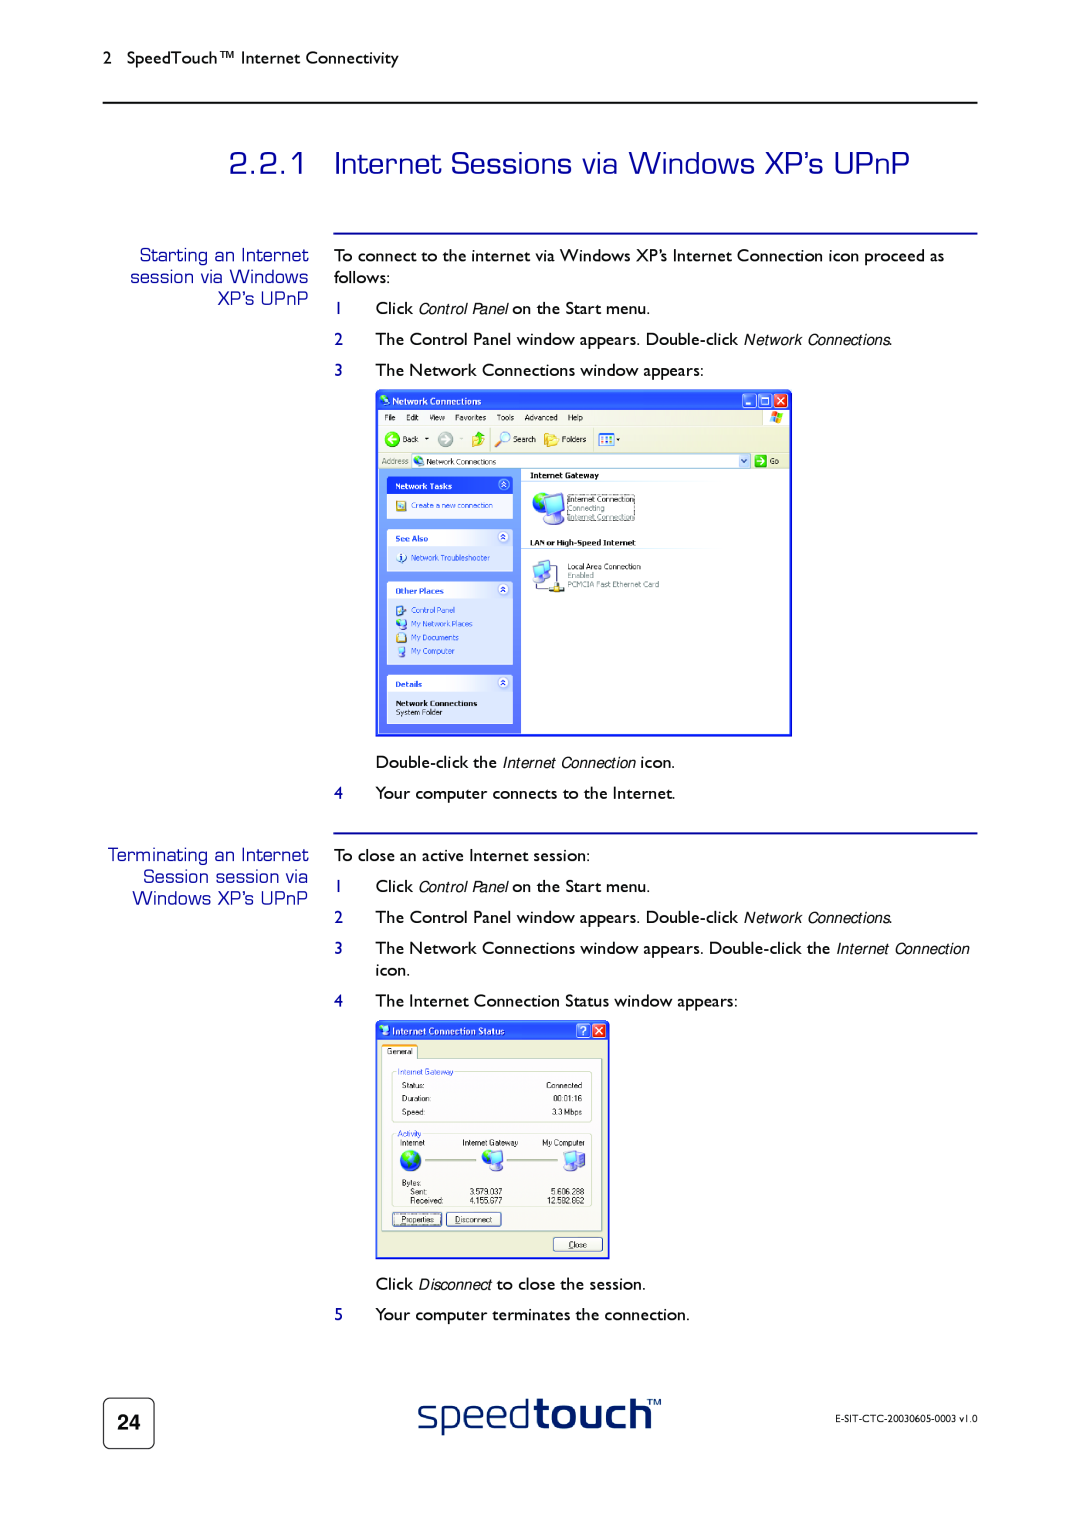 Technicolor - Thomson 605S Internet Sessions via Windows XP’s UPnP, Starting an Internet session via Windows XP’s UPnP 